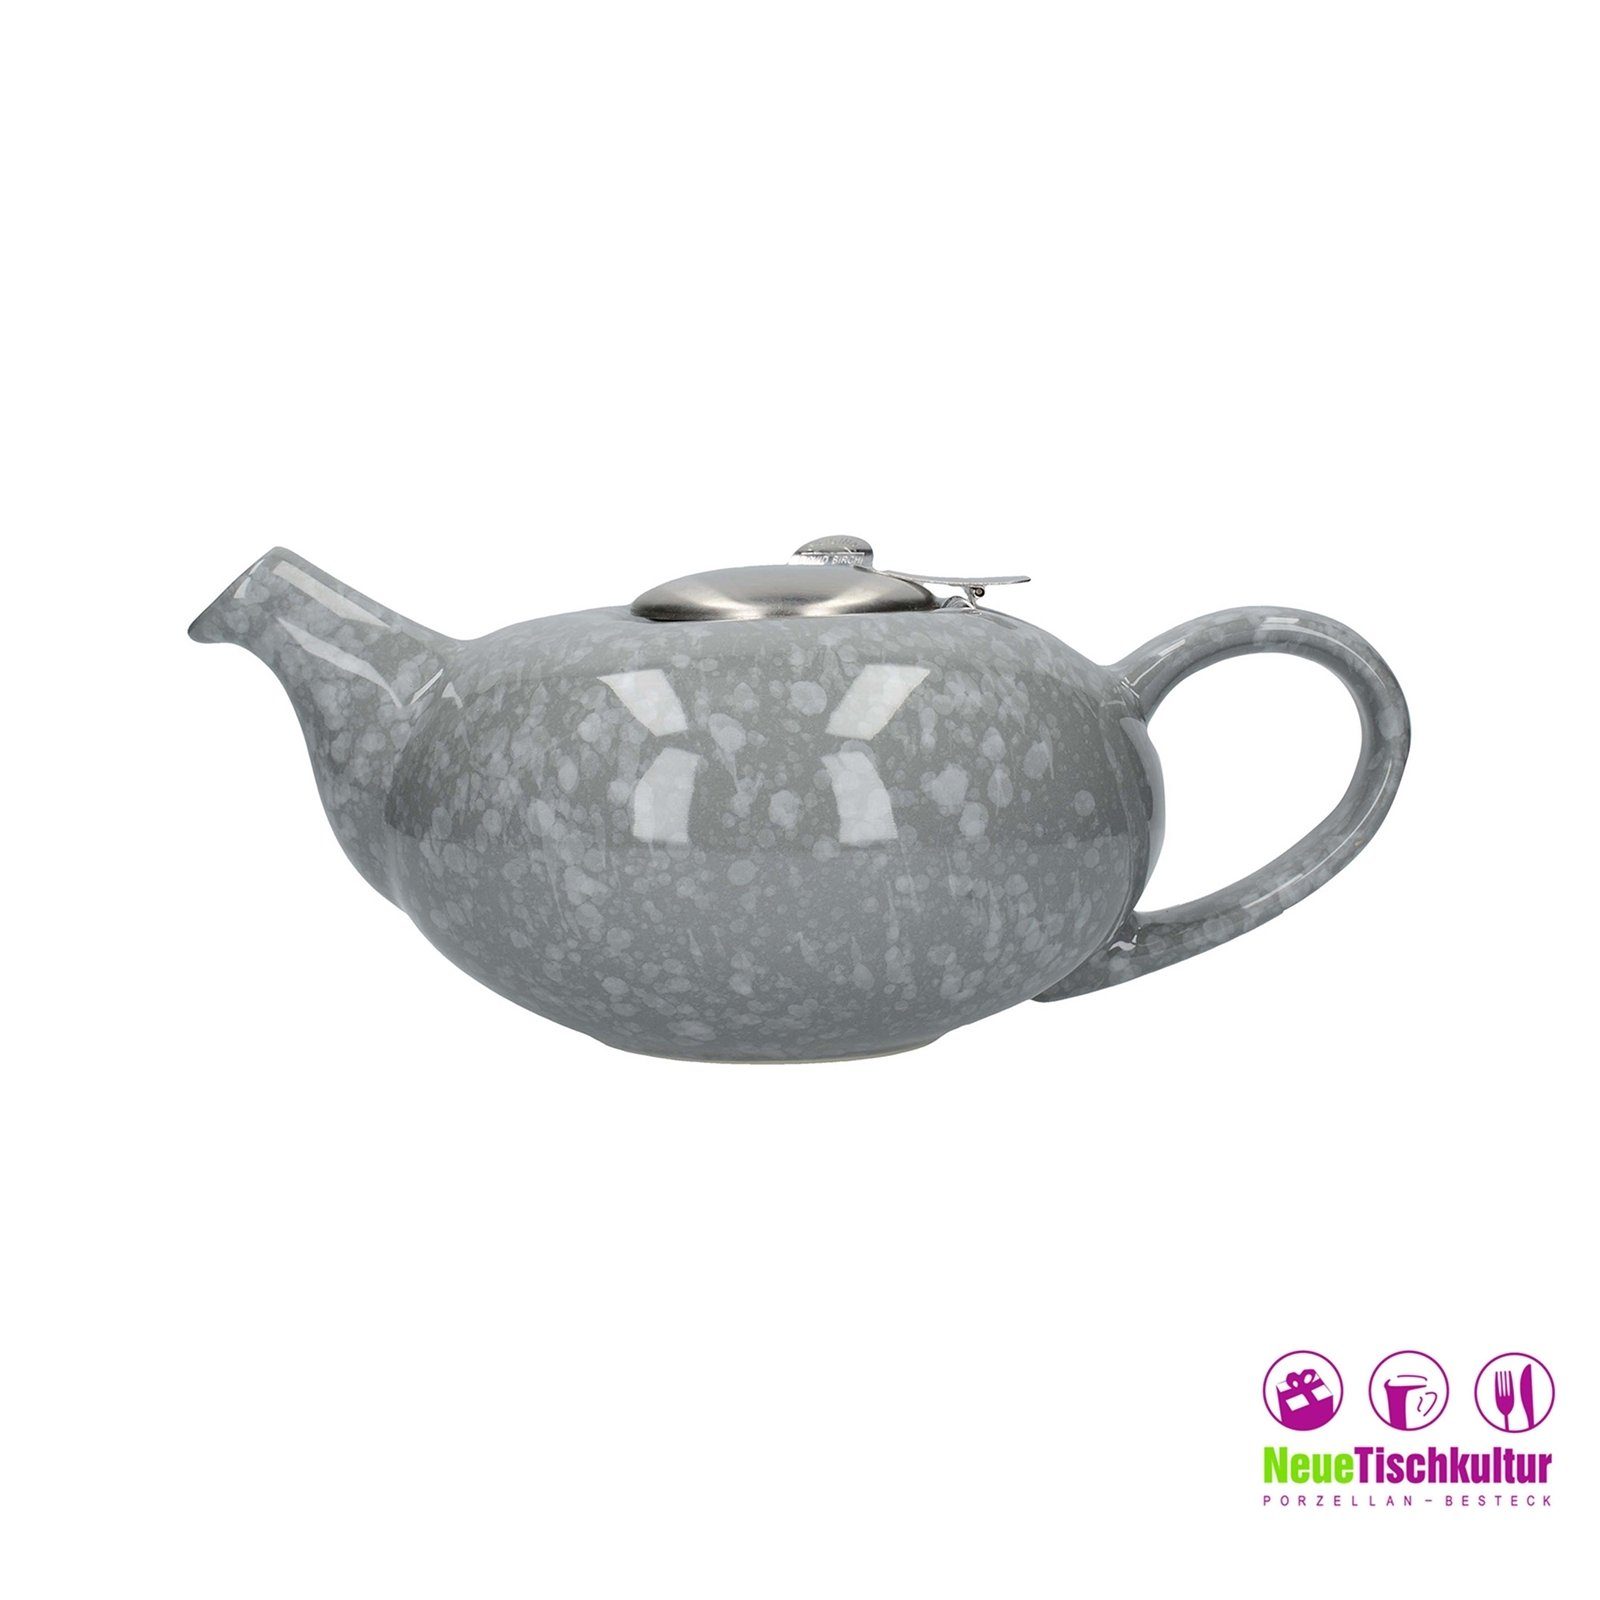 Neuetischkultur Teekanne Teekanne mit 1 Grau glänzend Tassen Sieb, Keramik, 1 4 L, marmoriert l